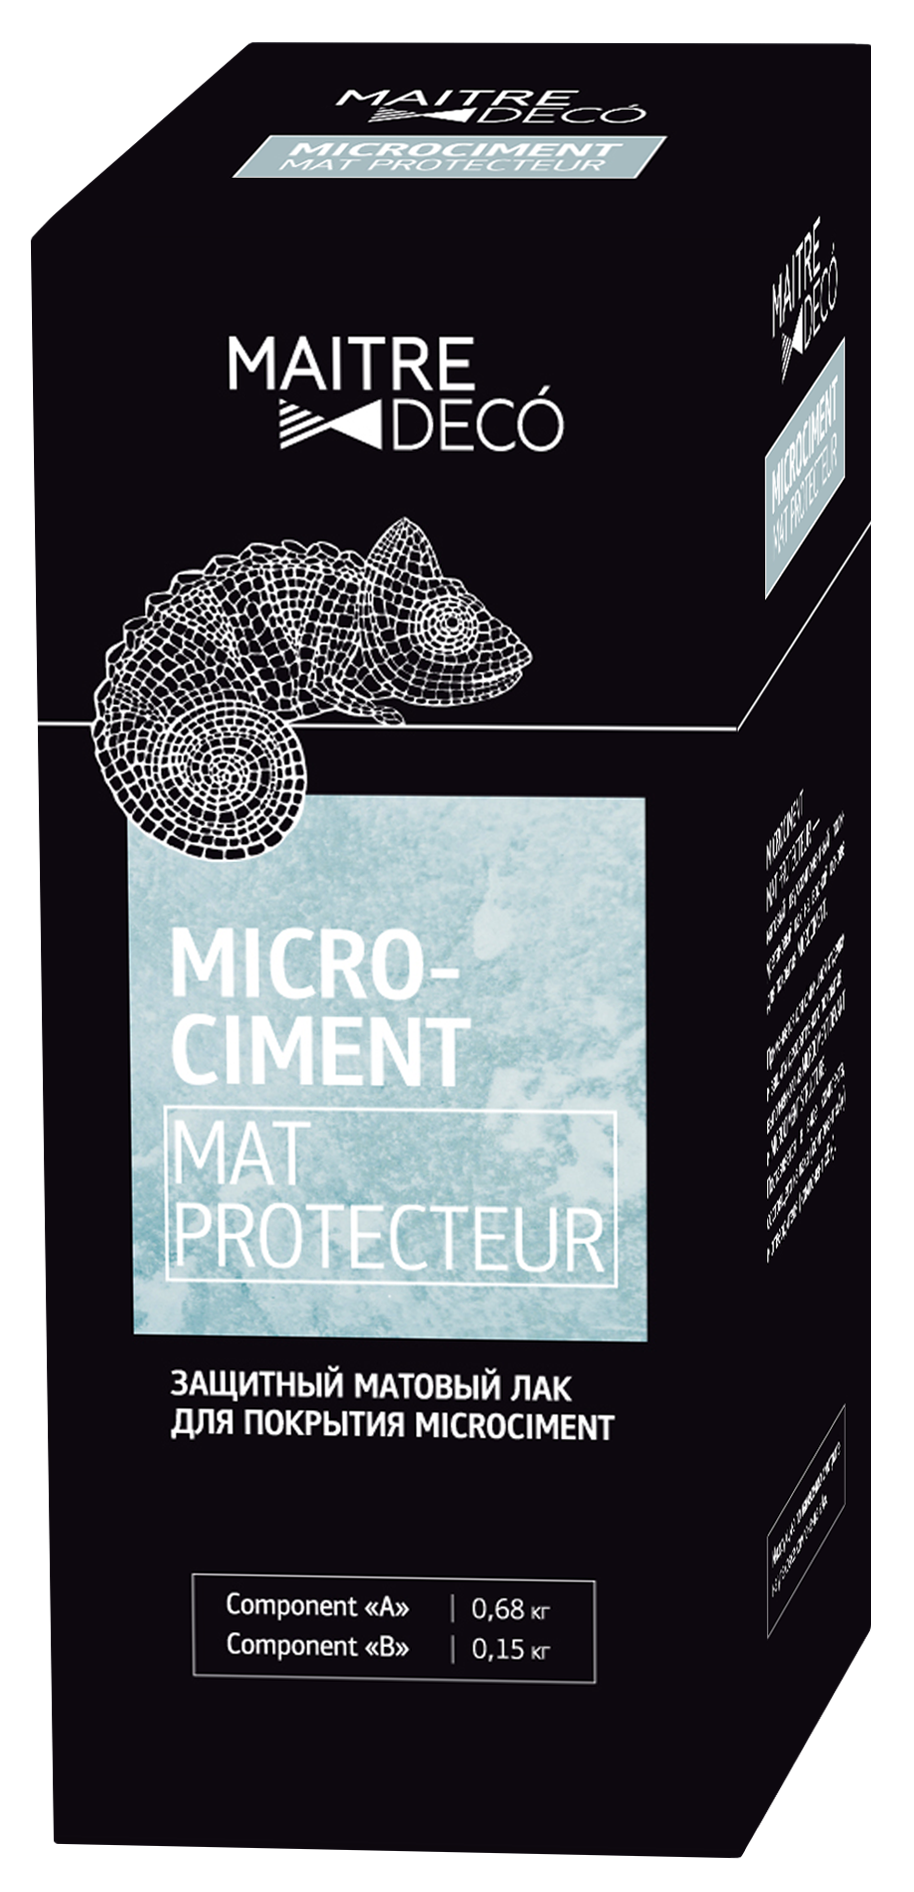 82891356 Защитный лак «Microciment Protecteur» 2 компонента 0.83 кг STLM-0037610 MAITRE DECO